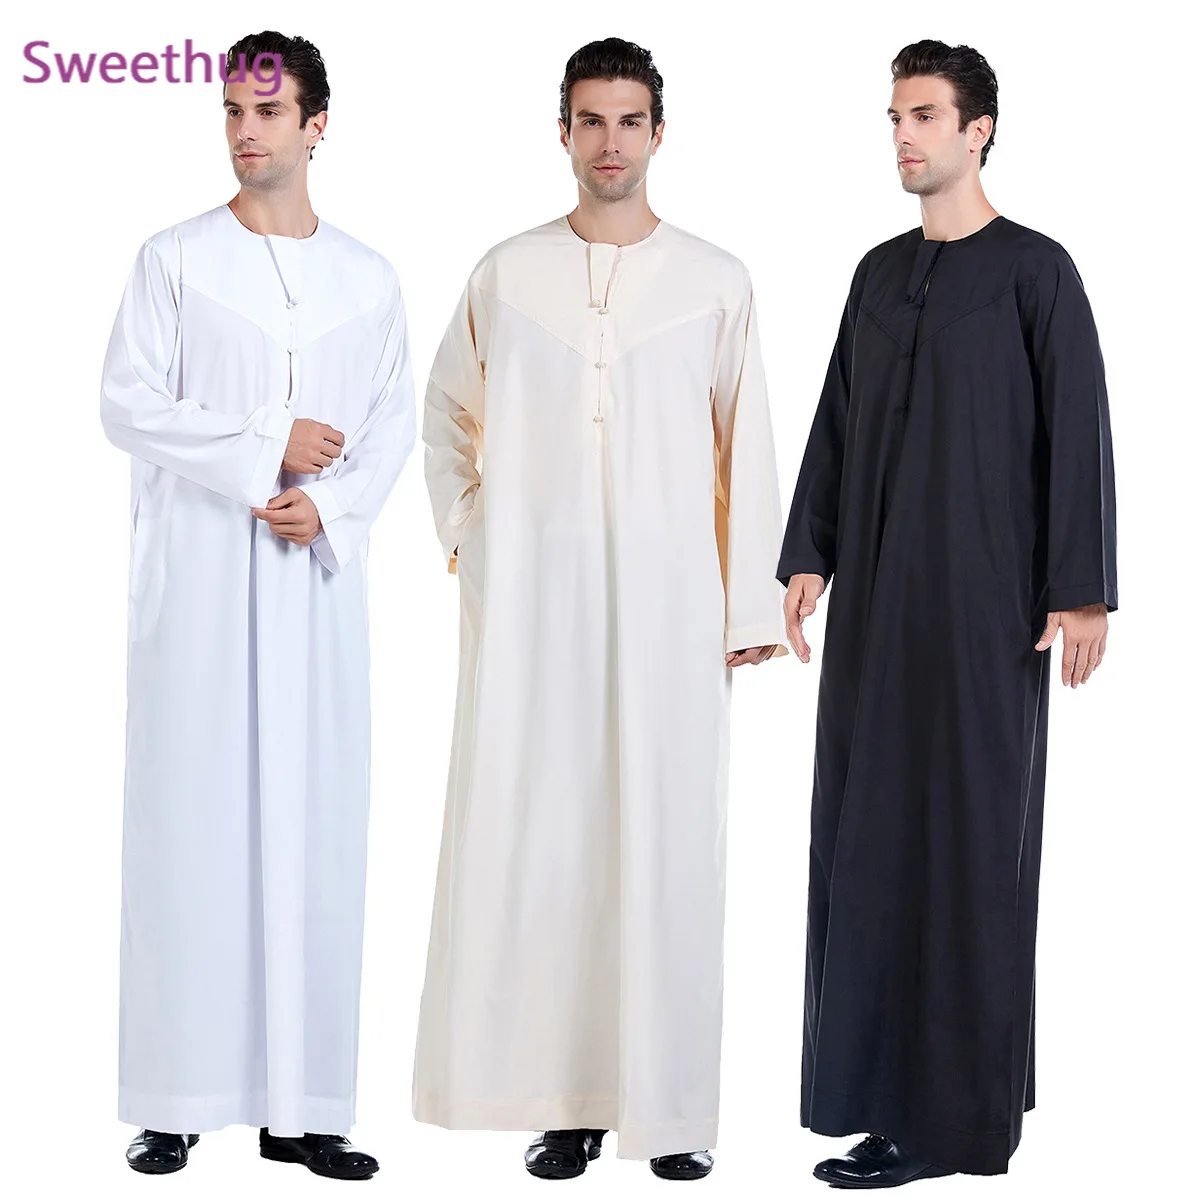 2021 Muslim clothing mens Muslim mode Panjabi dress for men saudi thobe for men Islamic clothing modest robe jubba palestine